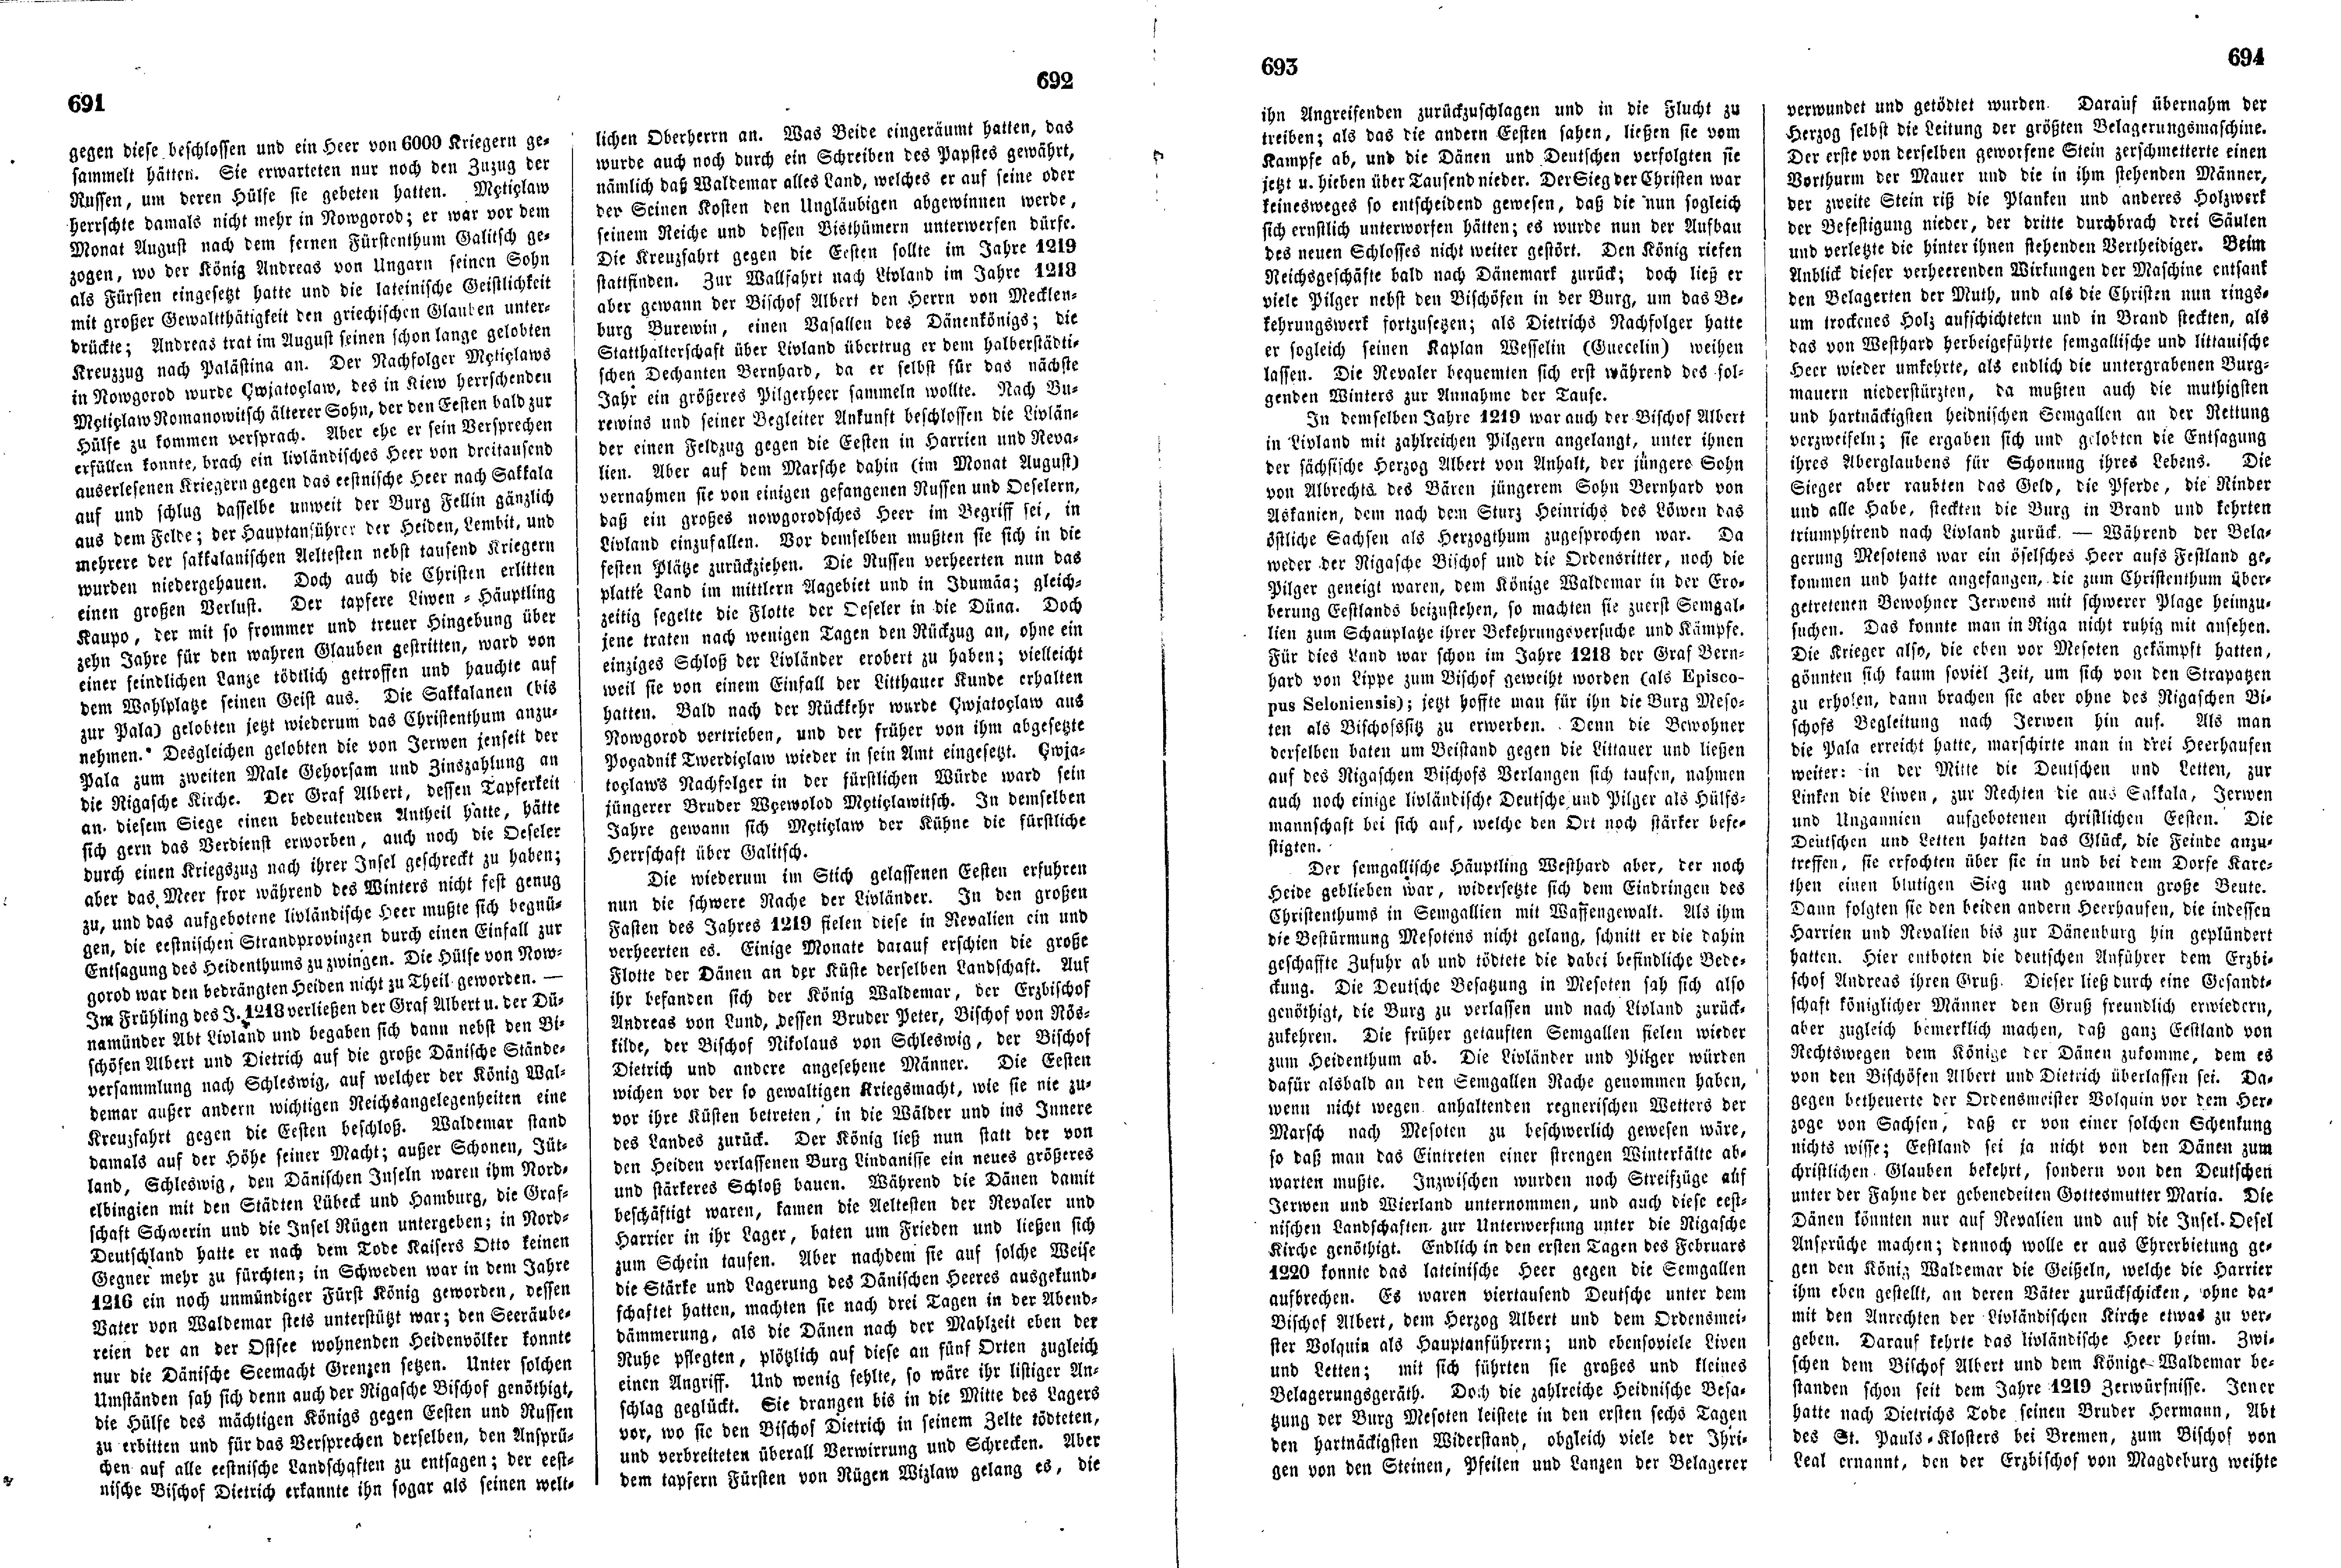 Das Inland [18] (1853) | 183. (691-694) Main body of text